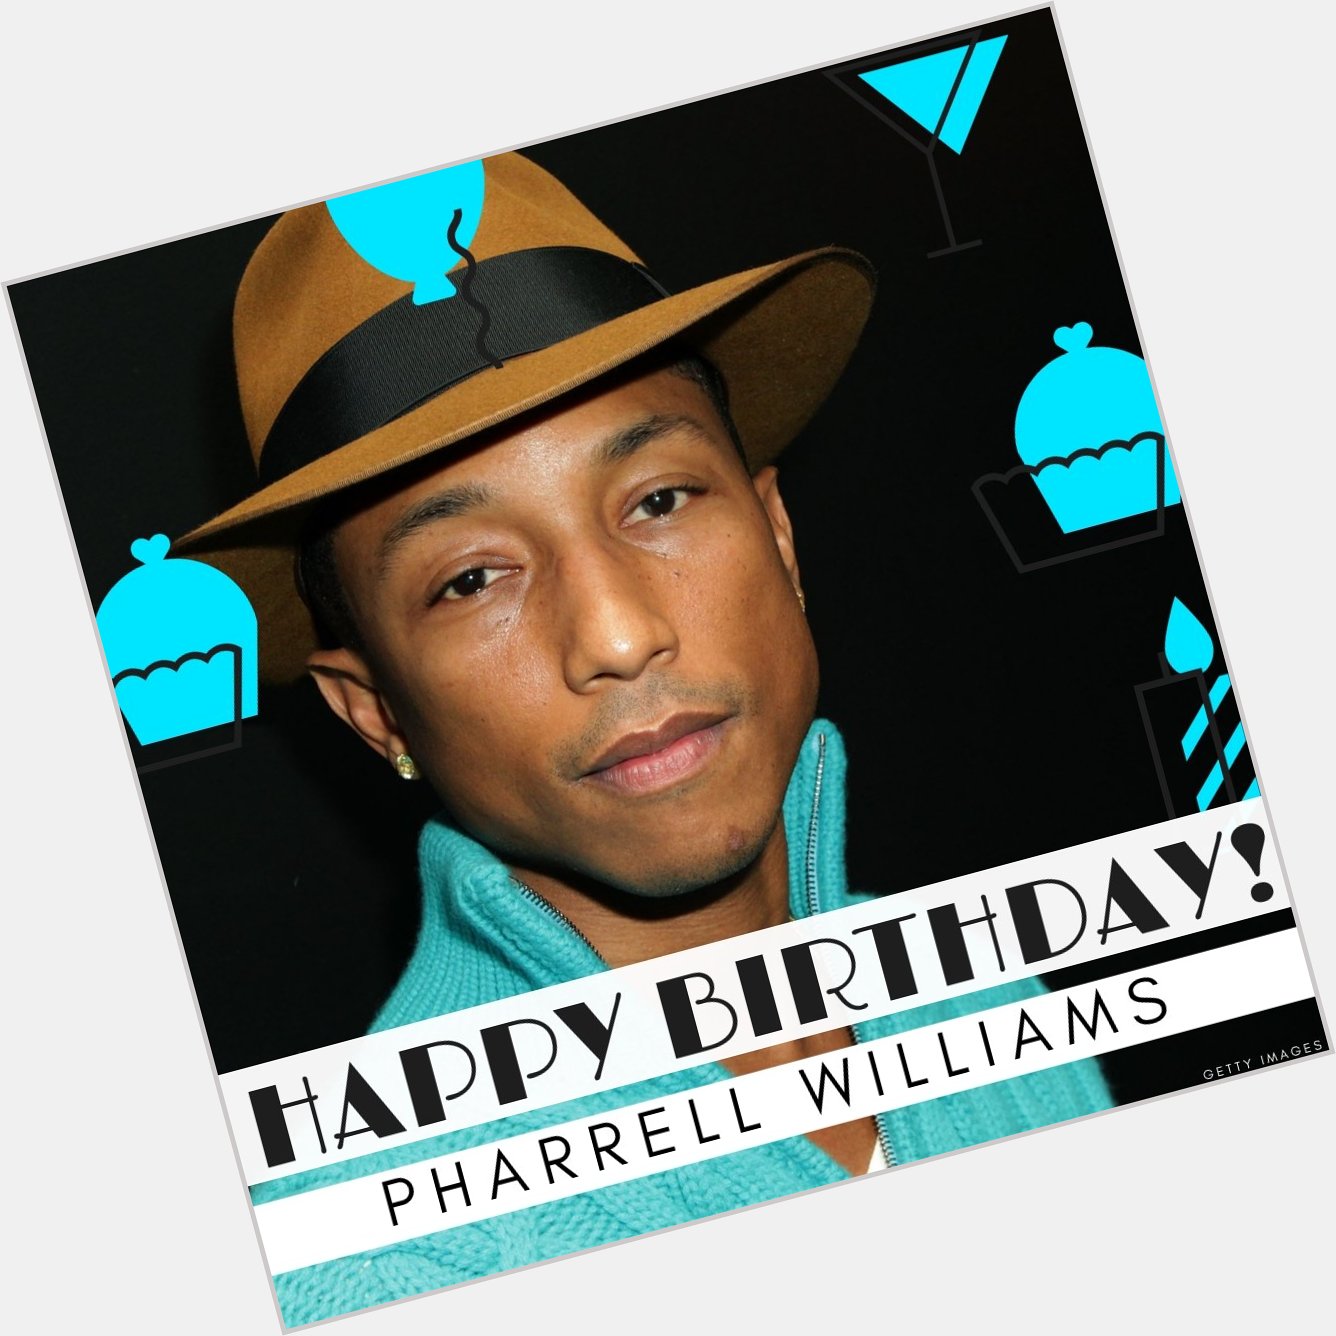 HAPPY BIRTHDAY!! Virginia\s own Pharrell Williams turns 46 today.  